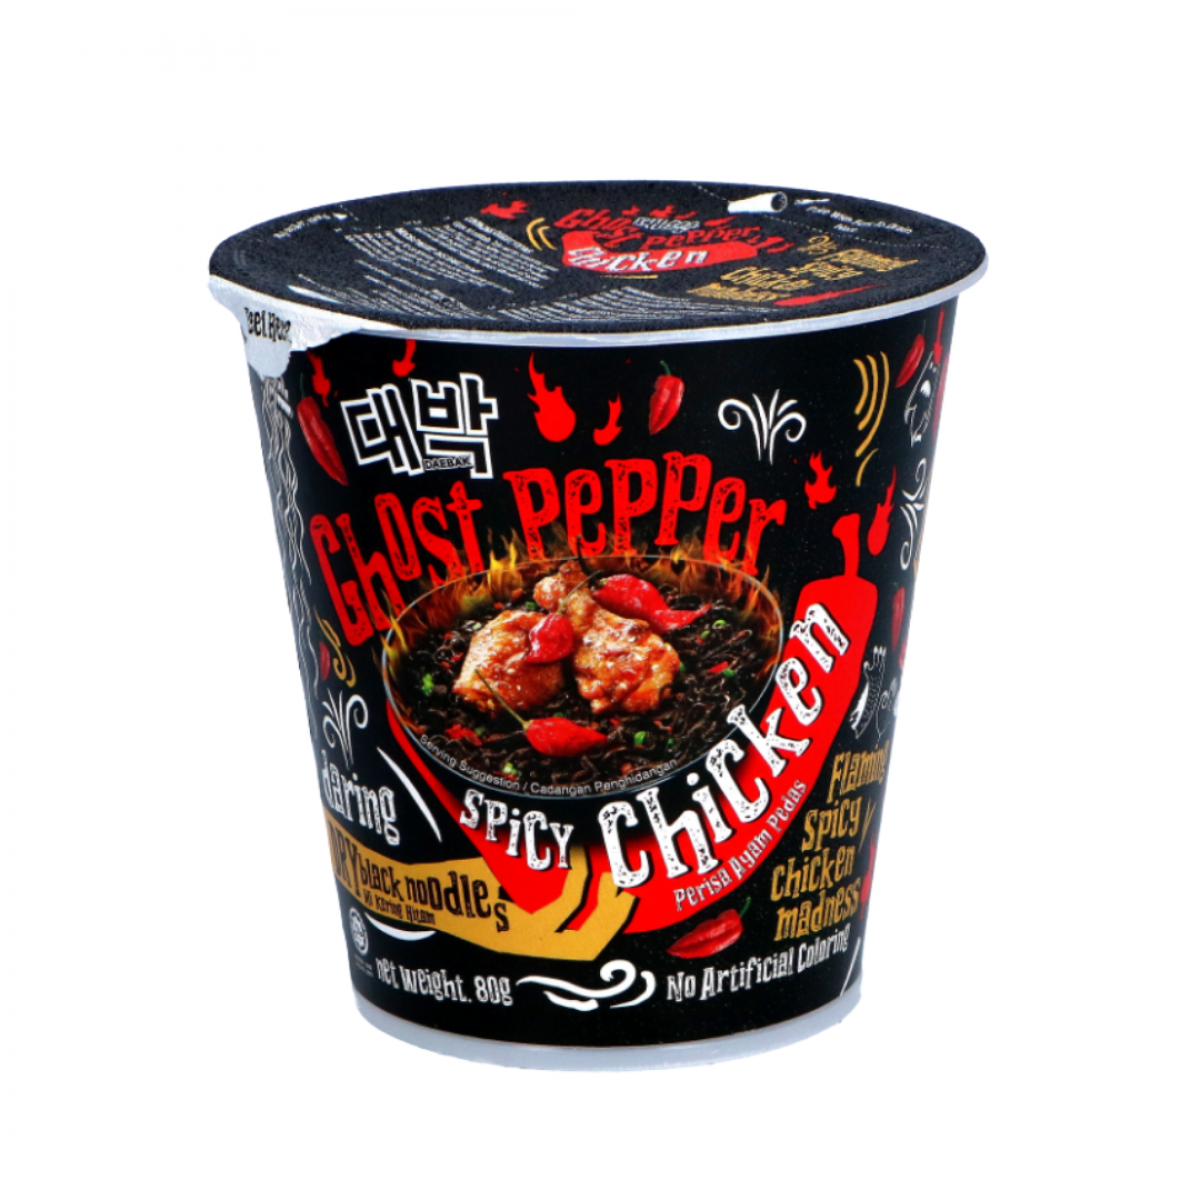 ghost pepper spicy chicken flavor dry black noodles